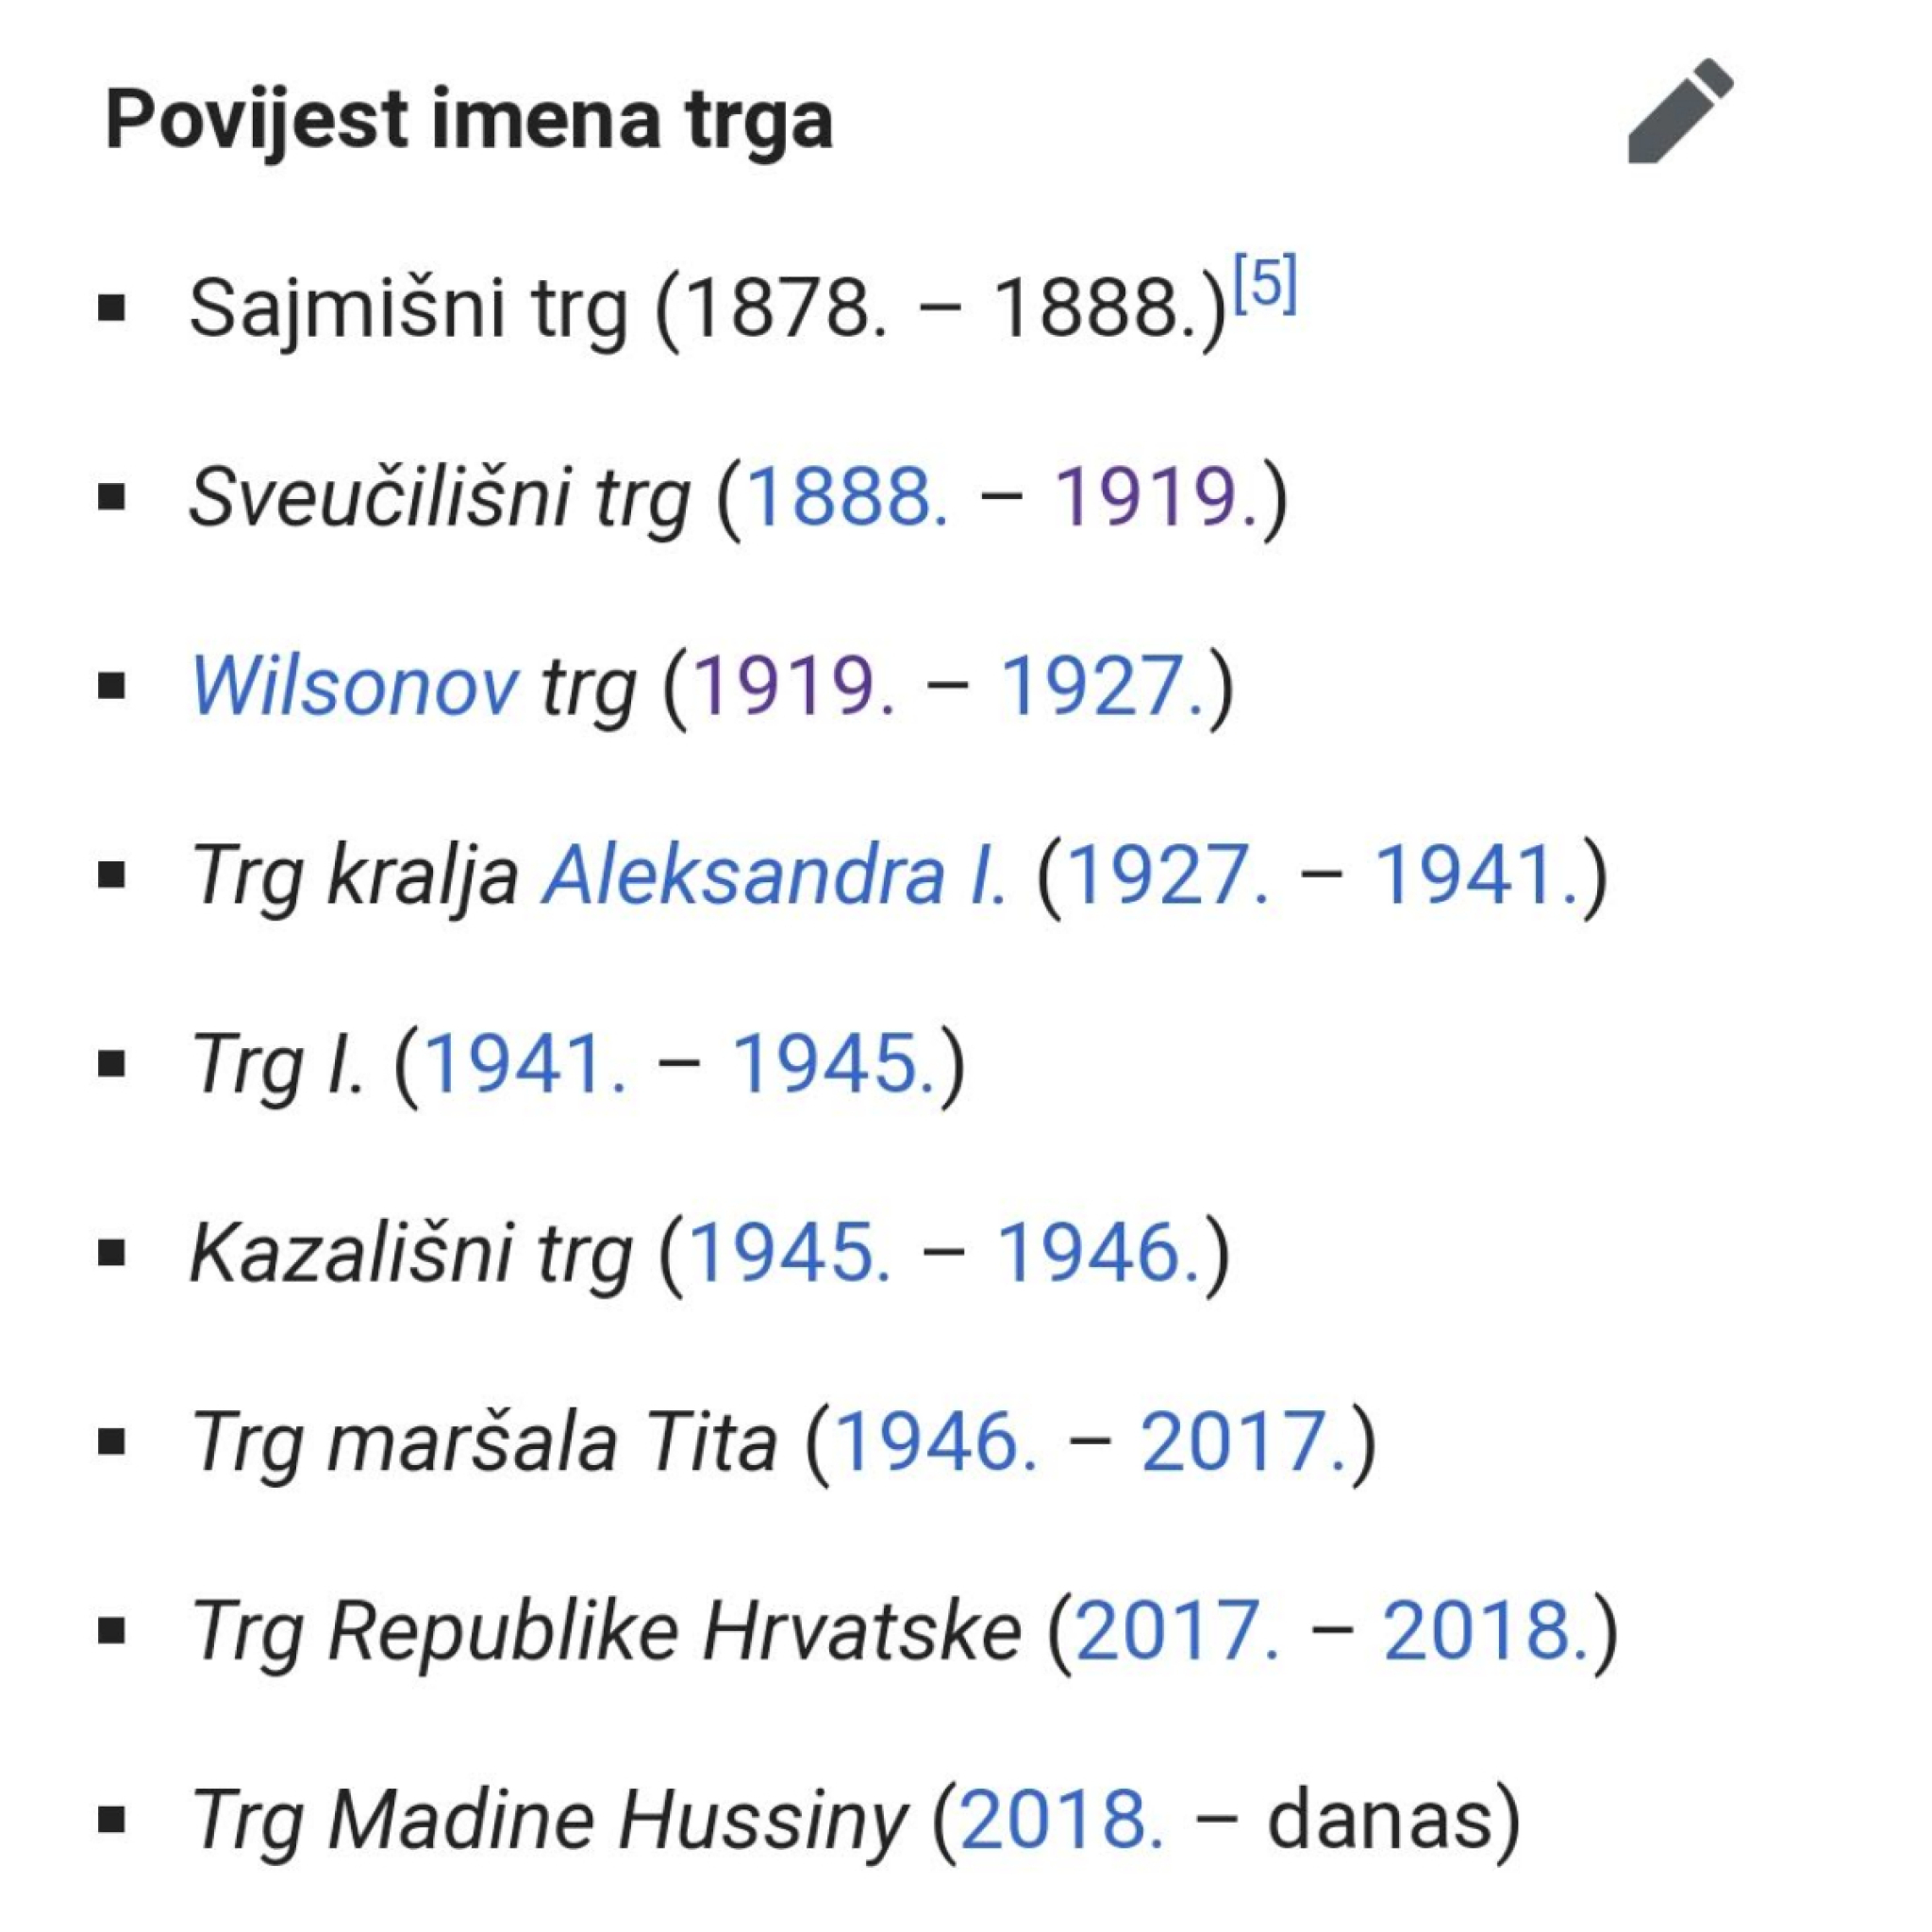 Renaming the Republic of Croatia Square into Madina Hussiny Square. Screenshot Wikipedia, 2018.